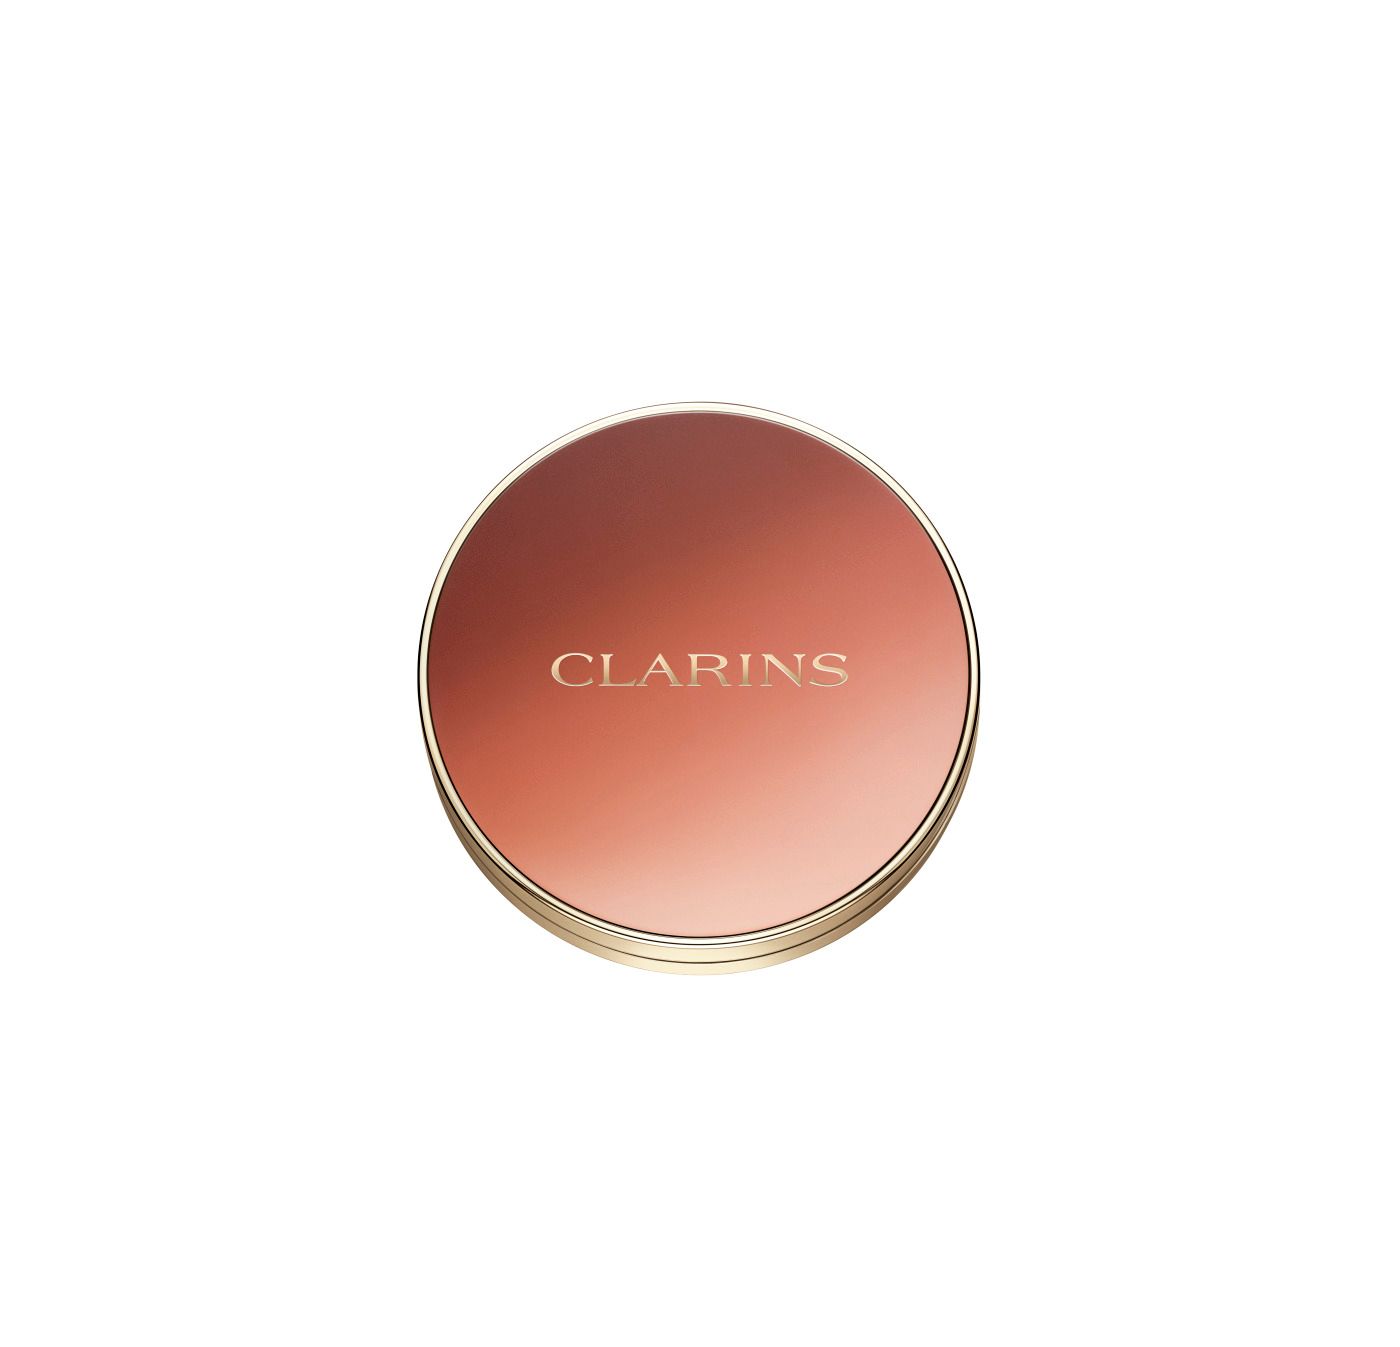 Clarins 4 palette eyeshadow 03 Flame